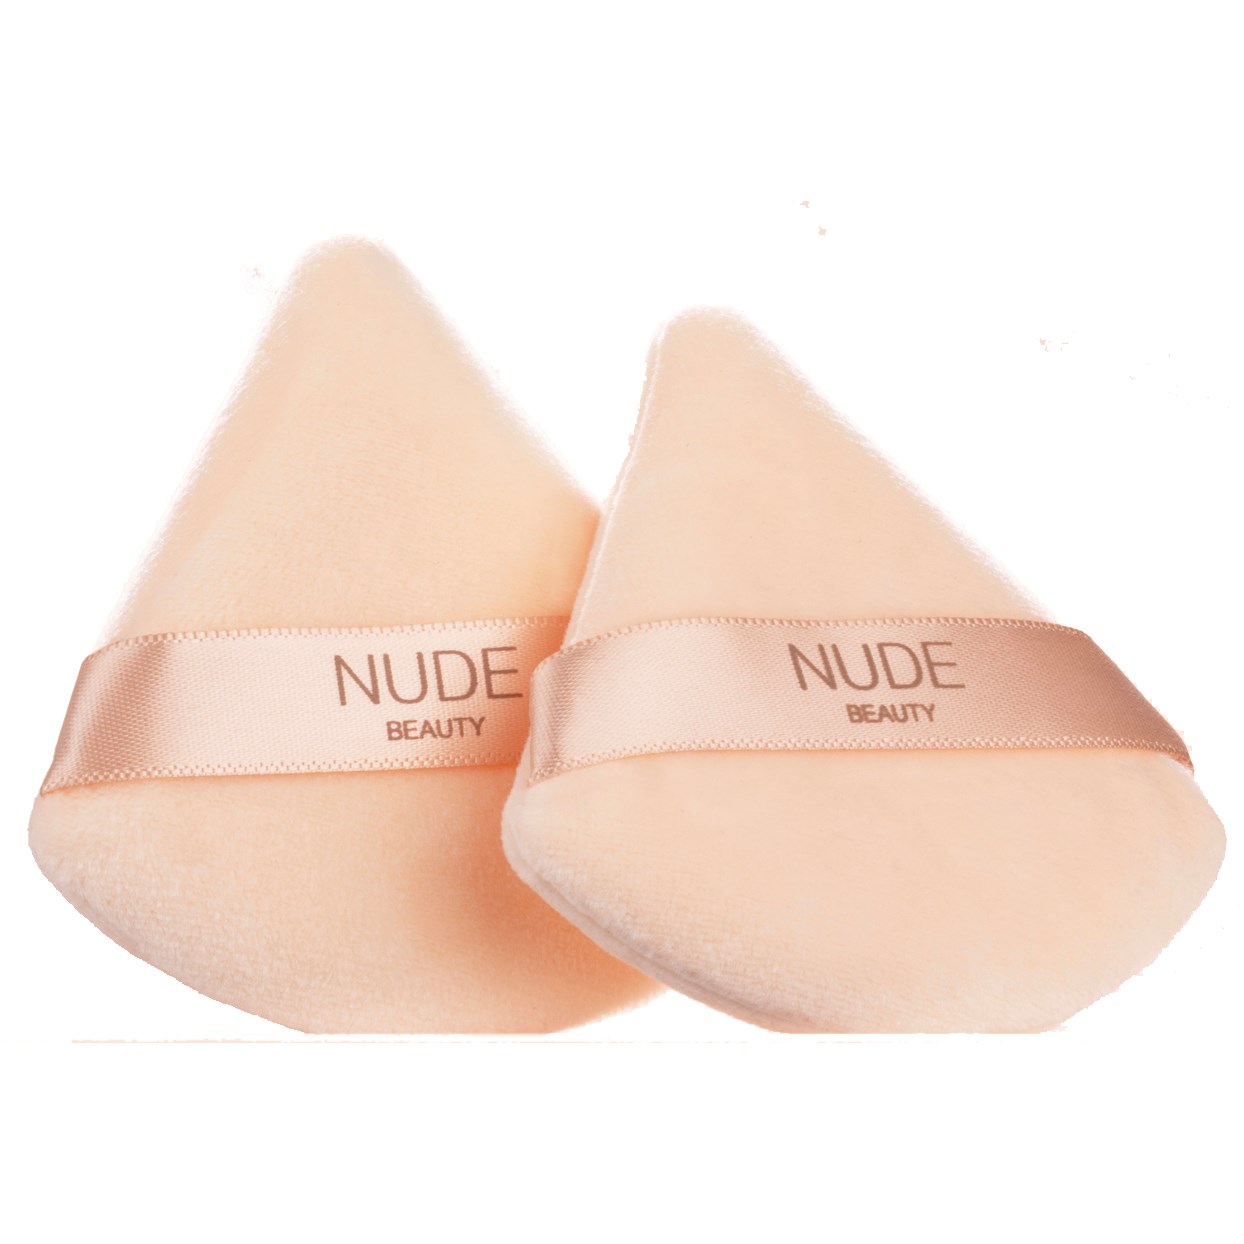 Nude Beauty Triangle Powder Puff Duo